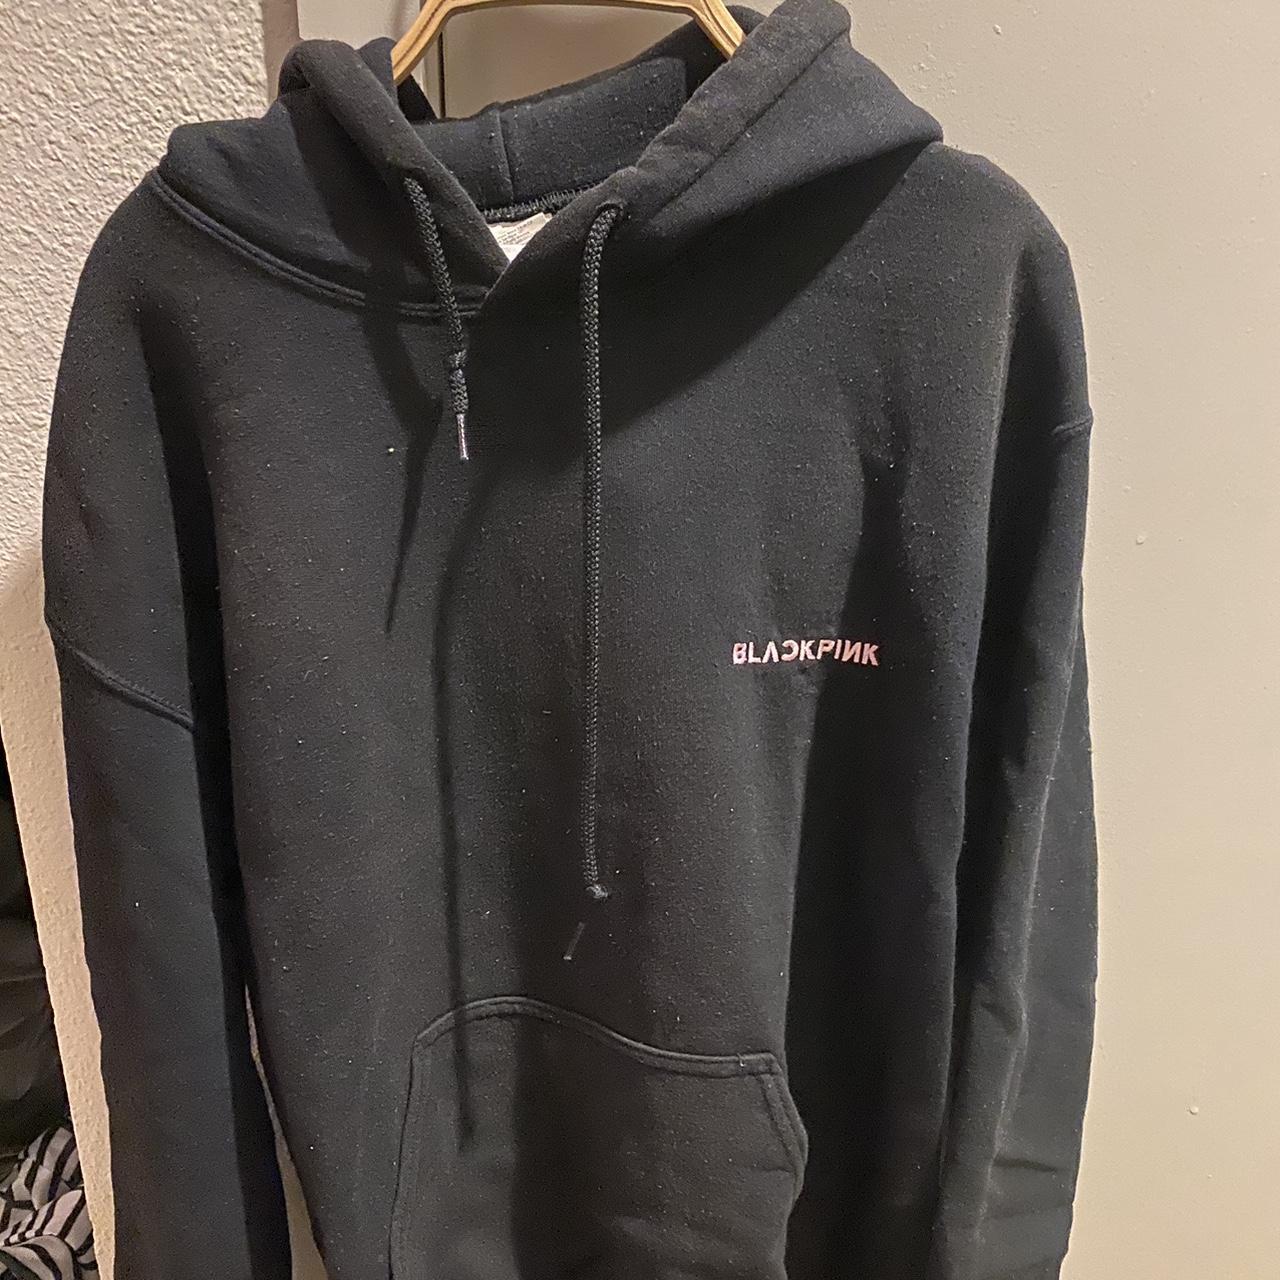 Blackpink hoodie bought at Paris concert Size:... - Depop